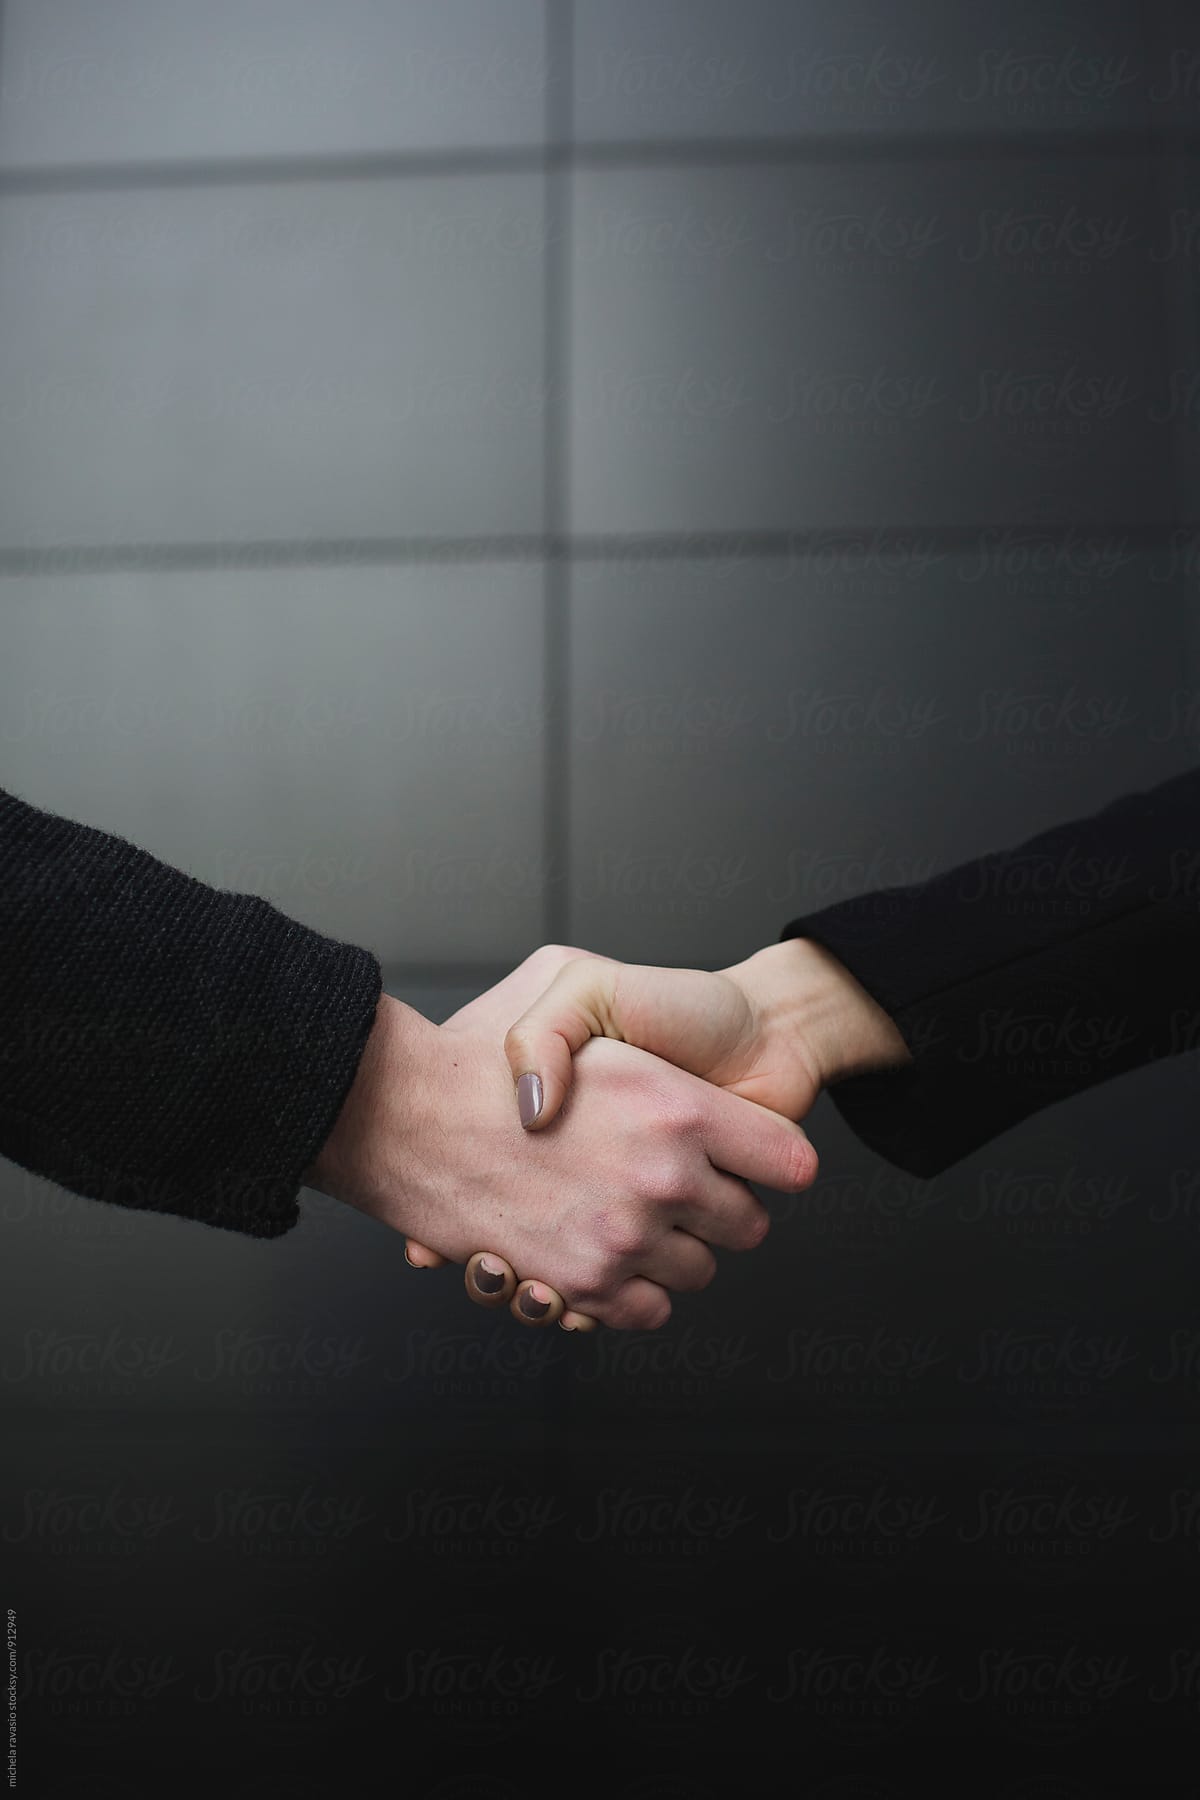 Handshake between man and woman